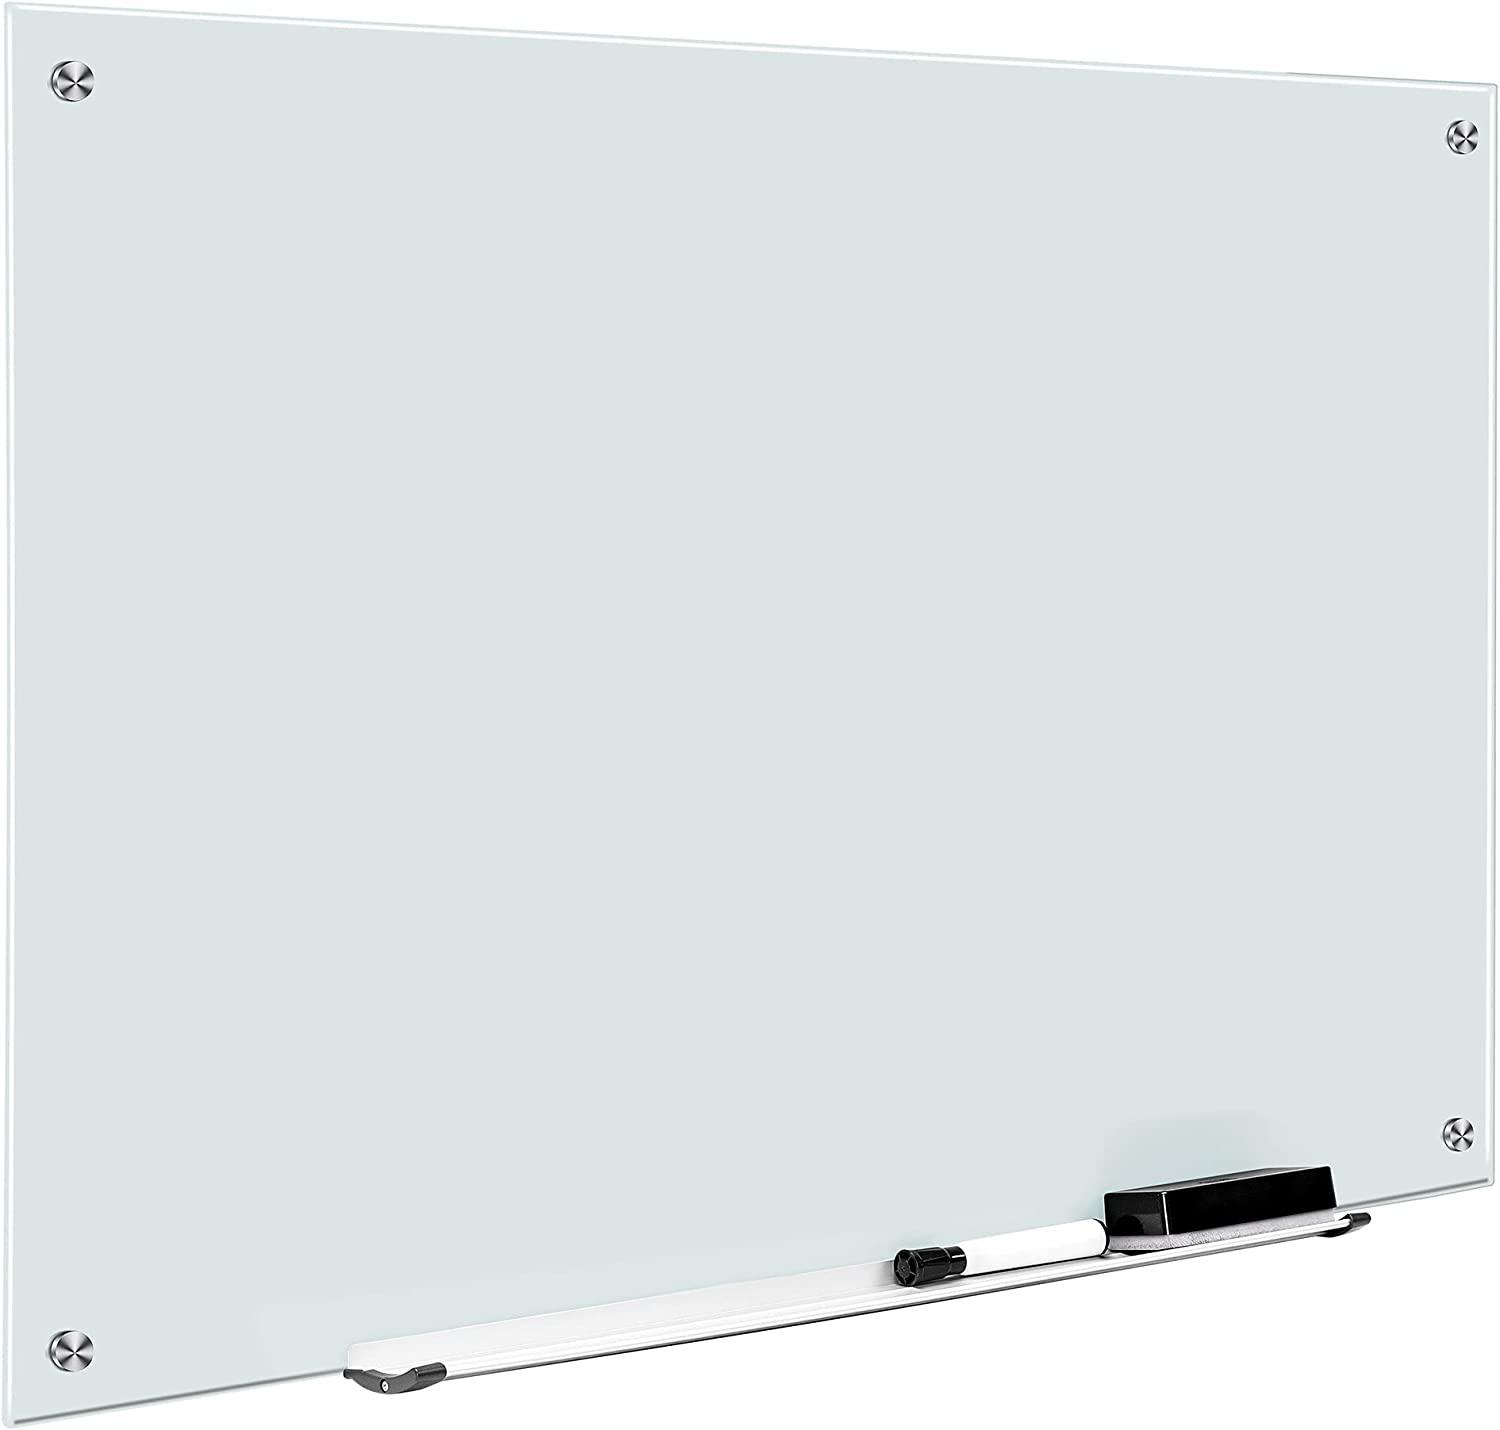 Amazon Basics Frameless Glass Non-Magnetic Dry Erase Board for $27.83 Shipped